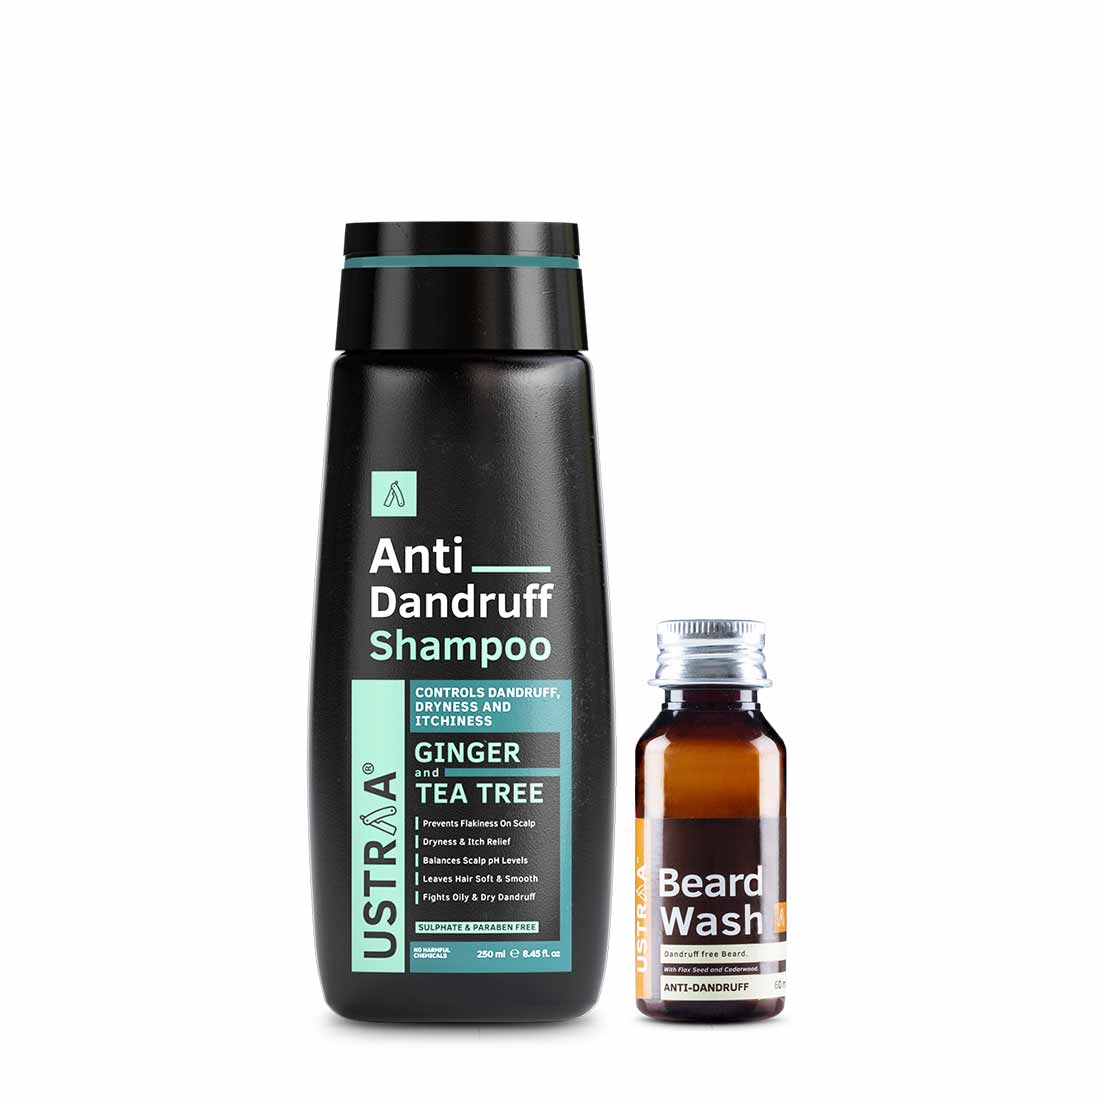 Anti-Dandruff Shampoo & Beard Wash Anti Dandruff